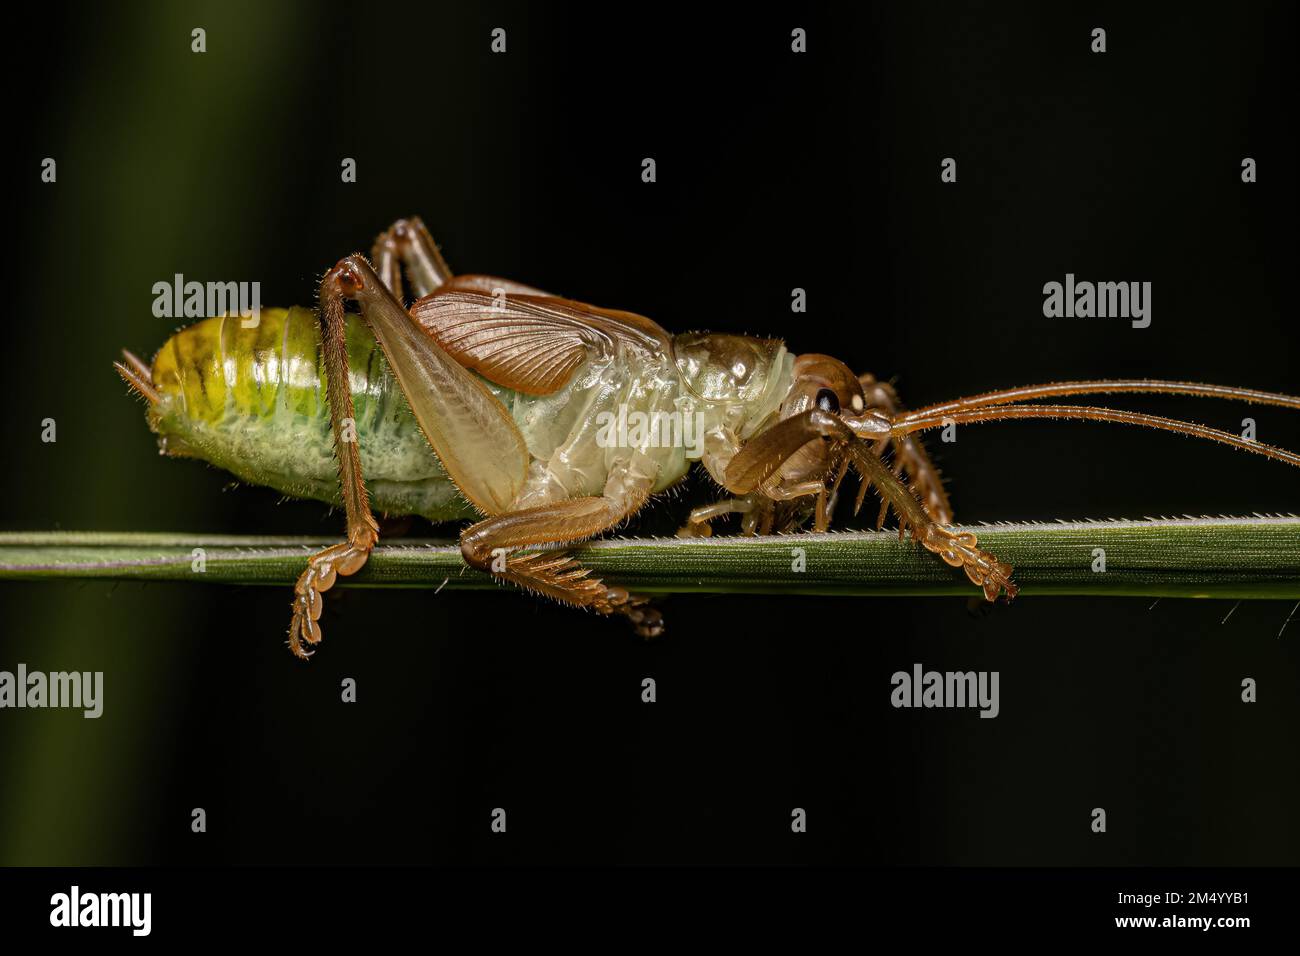 Raspy Cricket Nymph of the Family Gryllacrididae Stock Photo